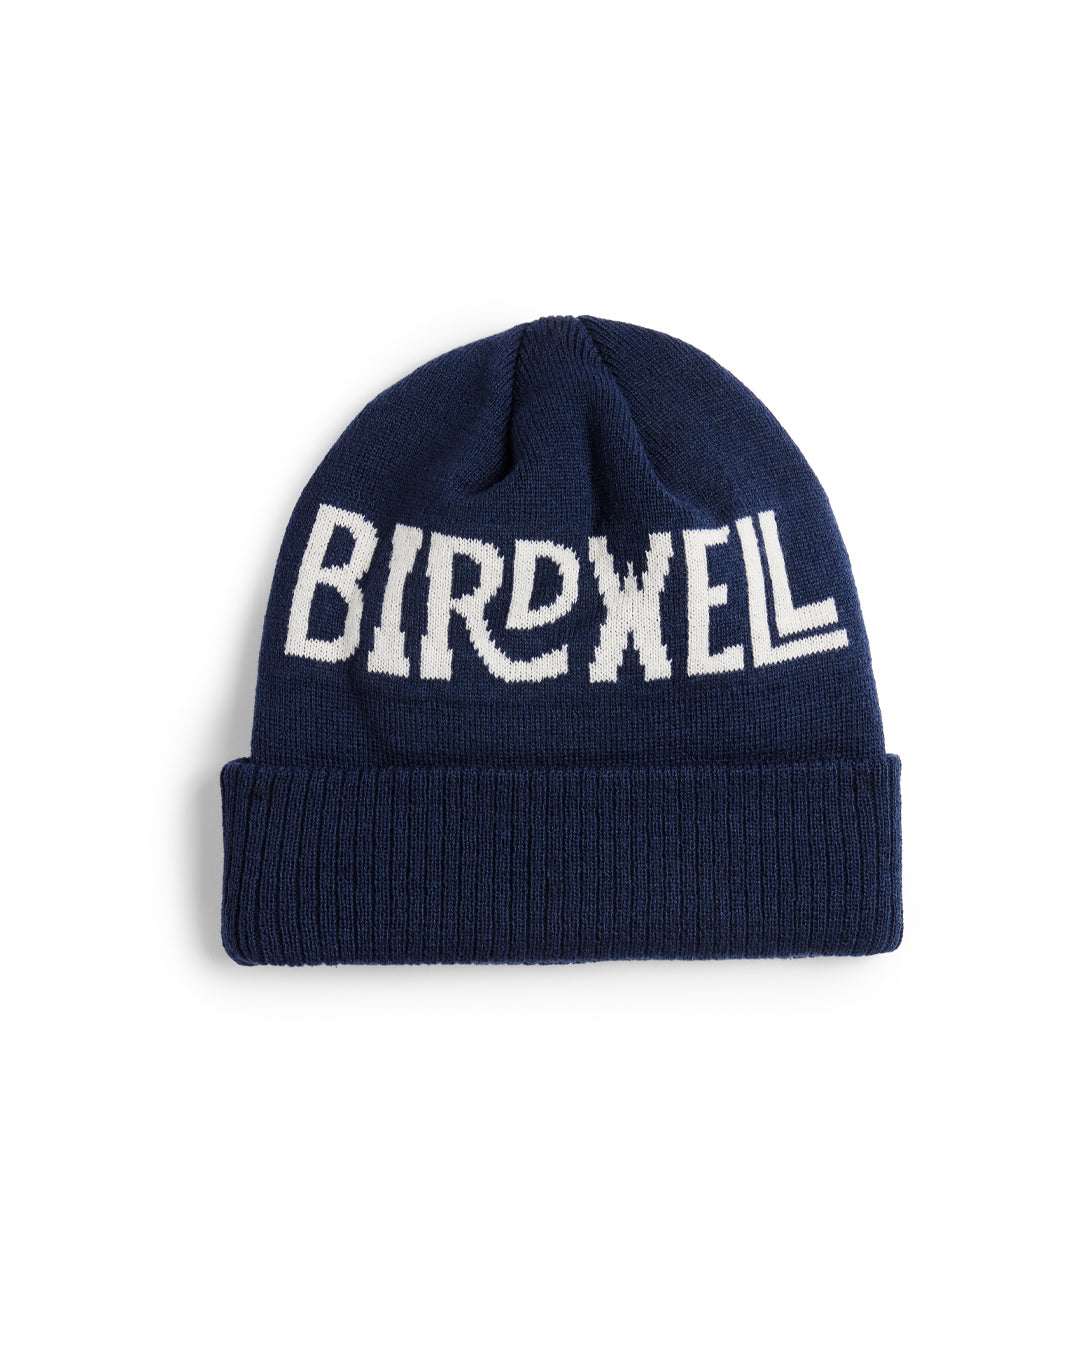 Hats – Birdwell